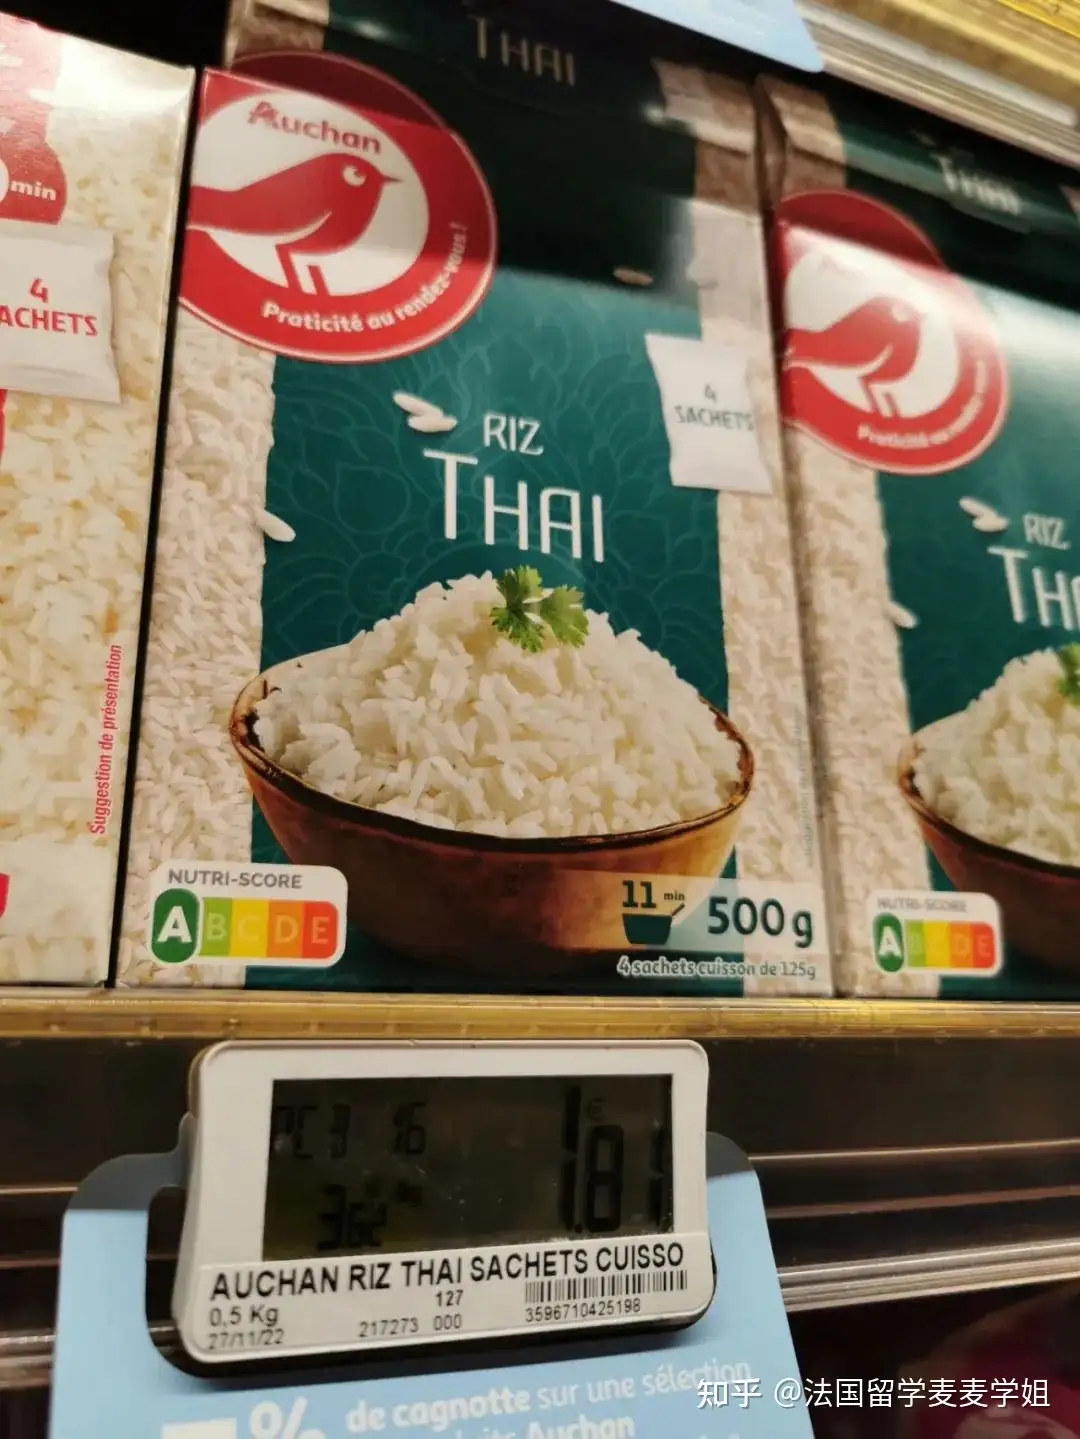 Auchan - Riz thaï 500g